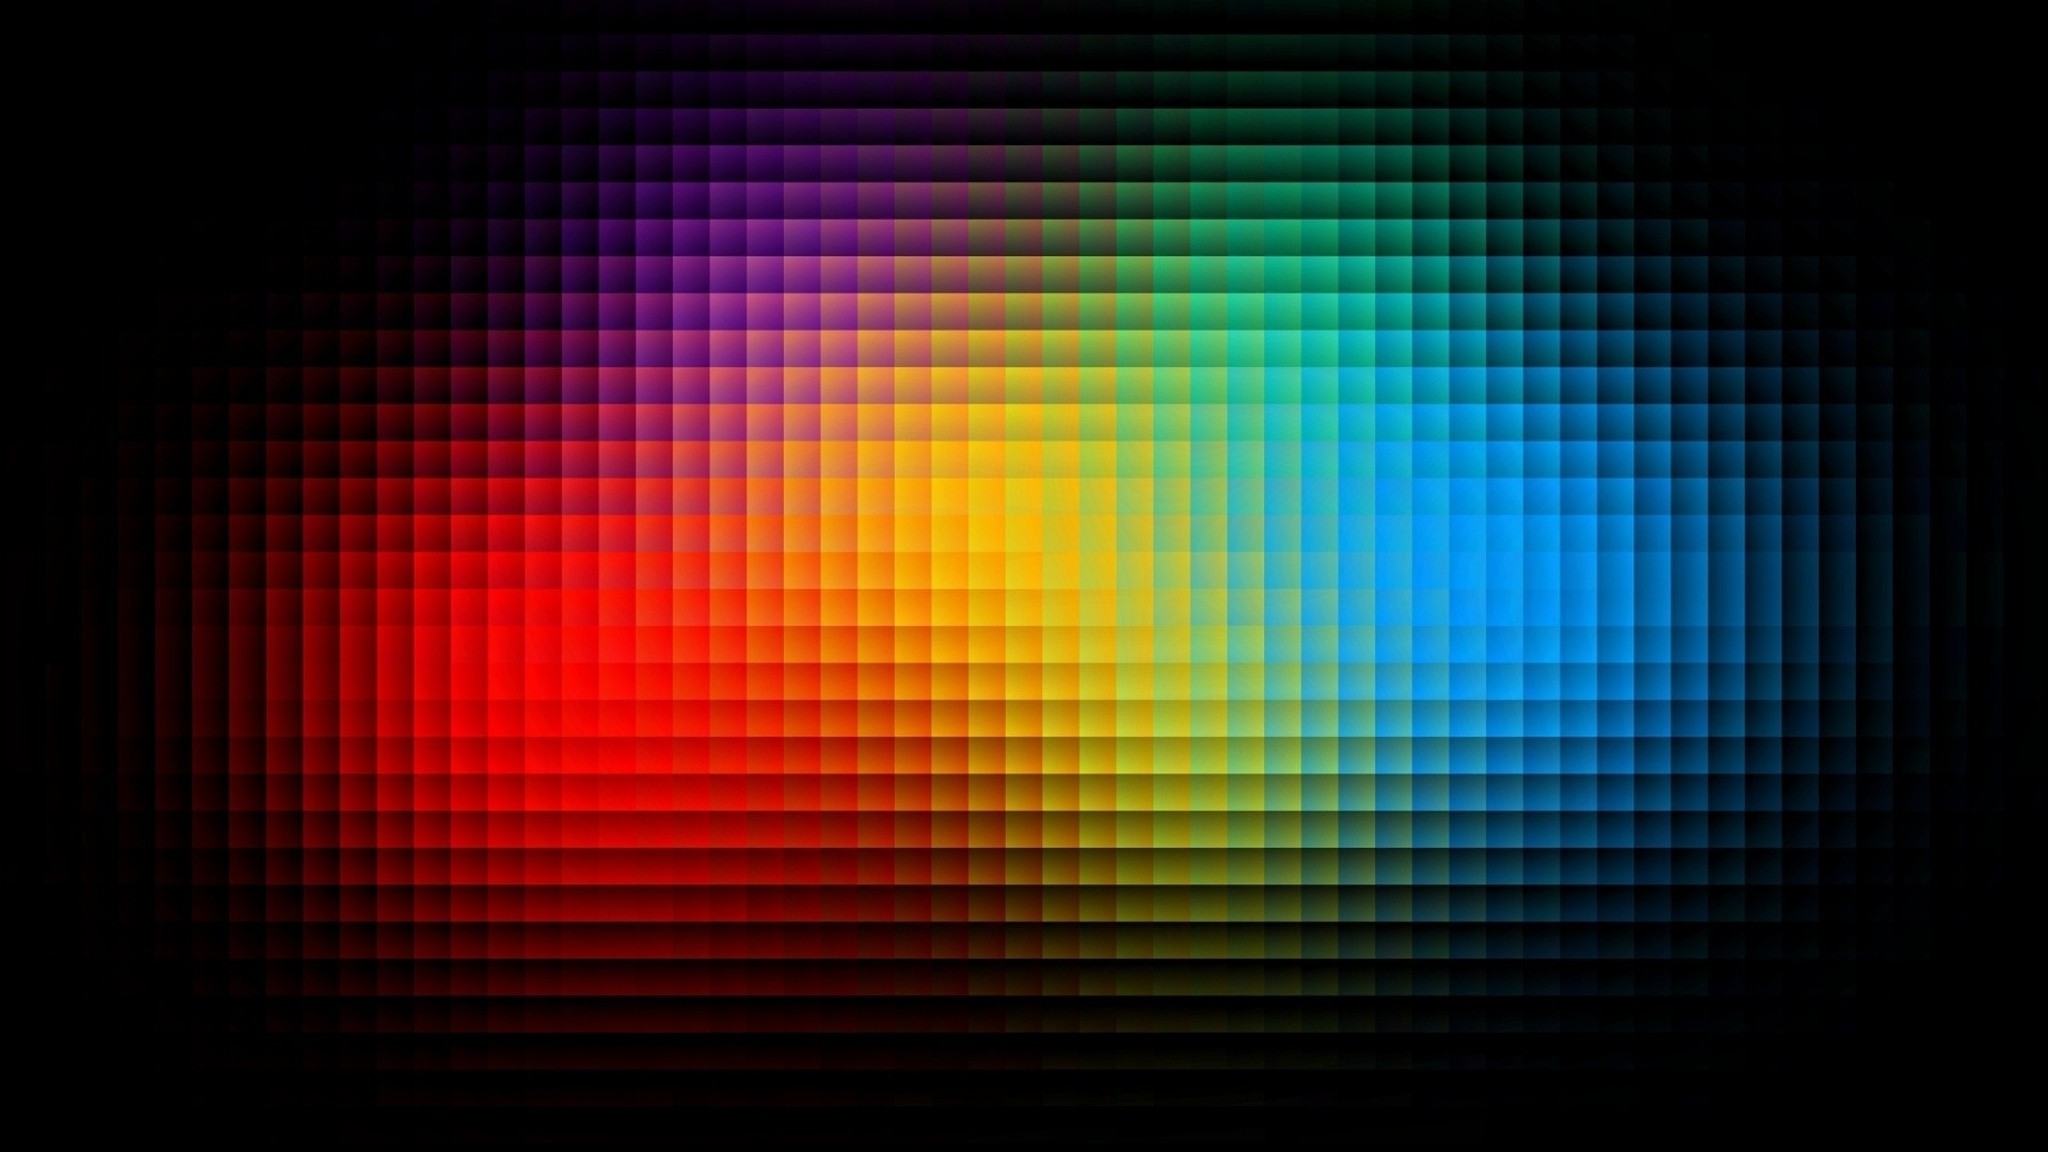 2048x1152 2048 x 1152 Pixels Wallpaper - WallpaperSafari () ...